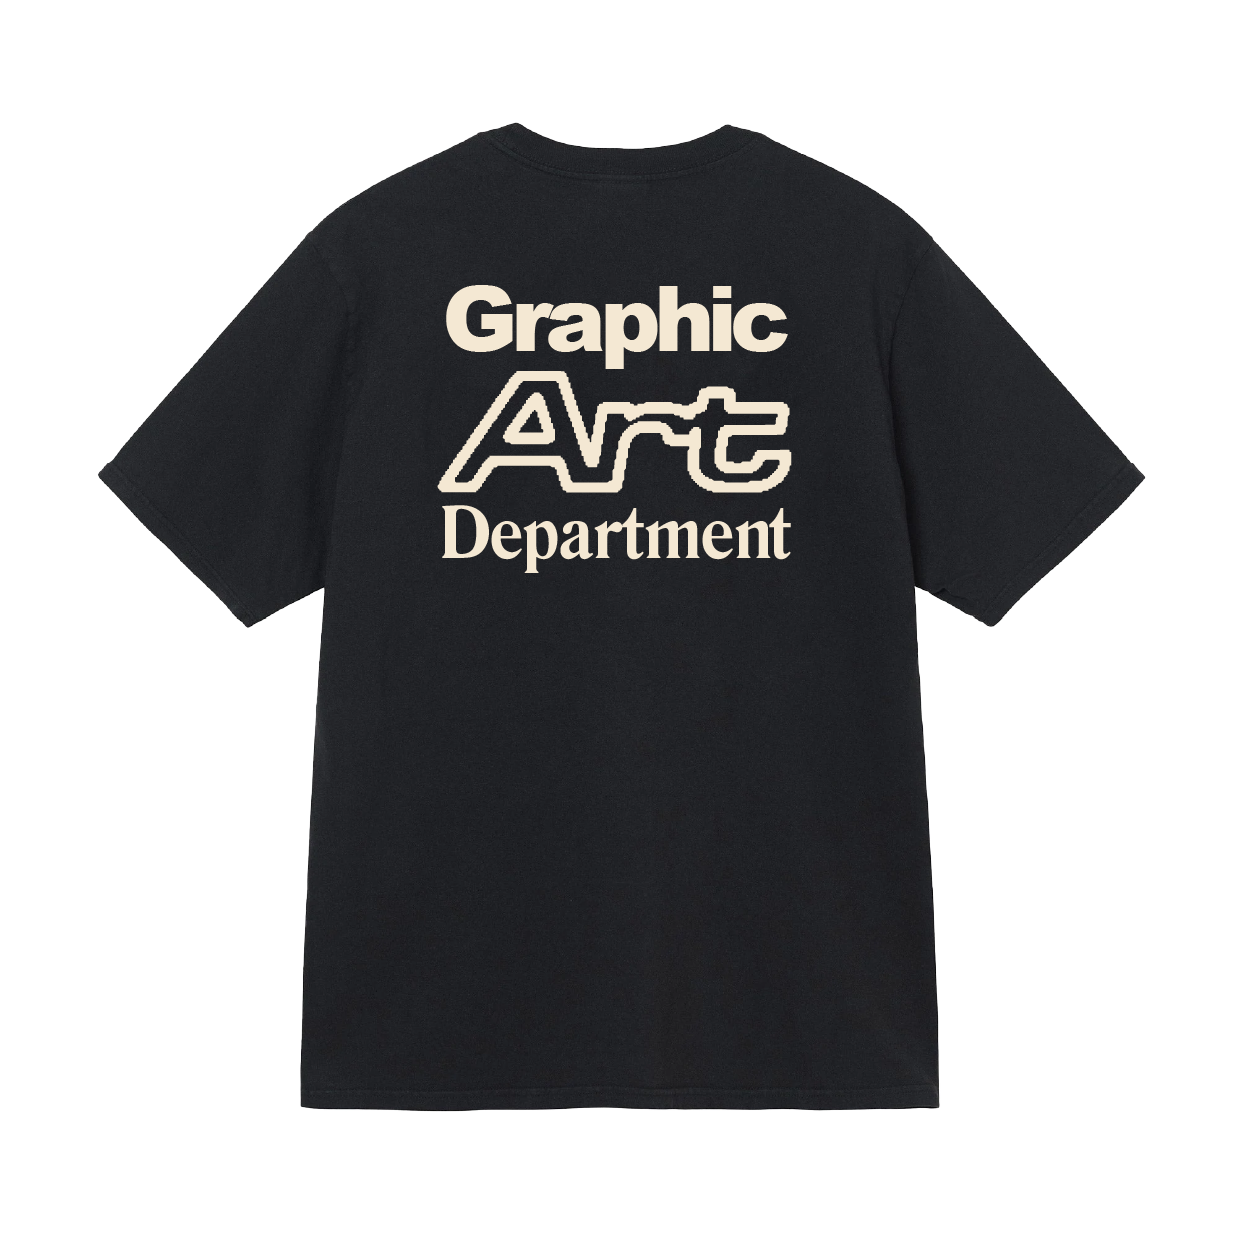 Graphic Art Department Tee Black